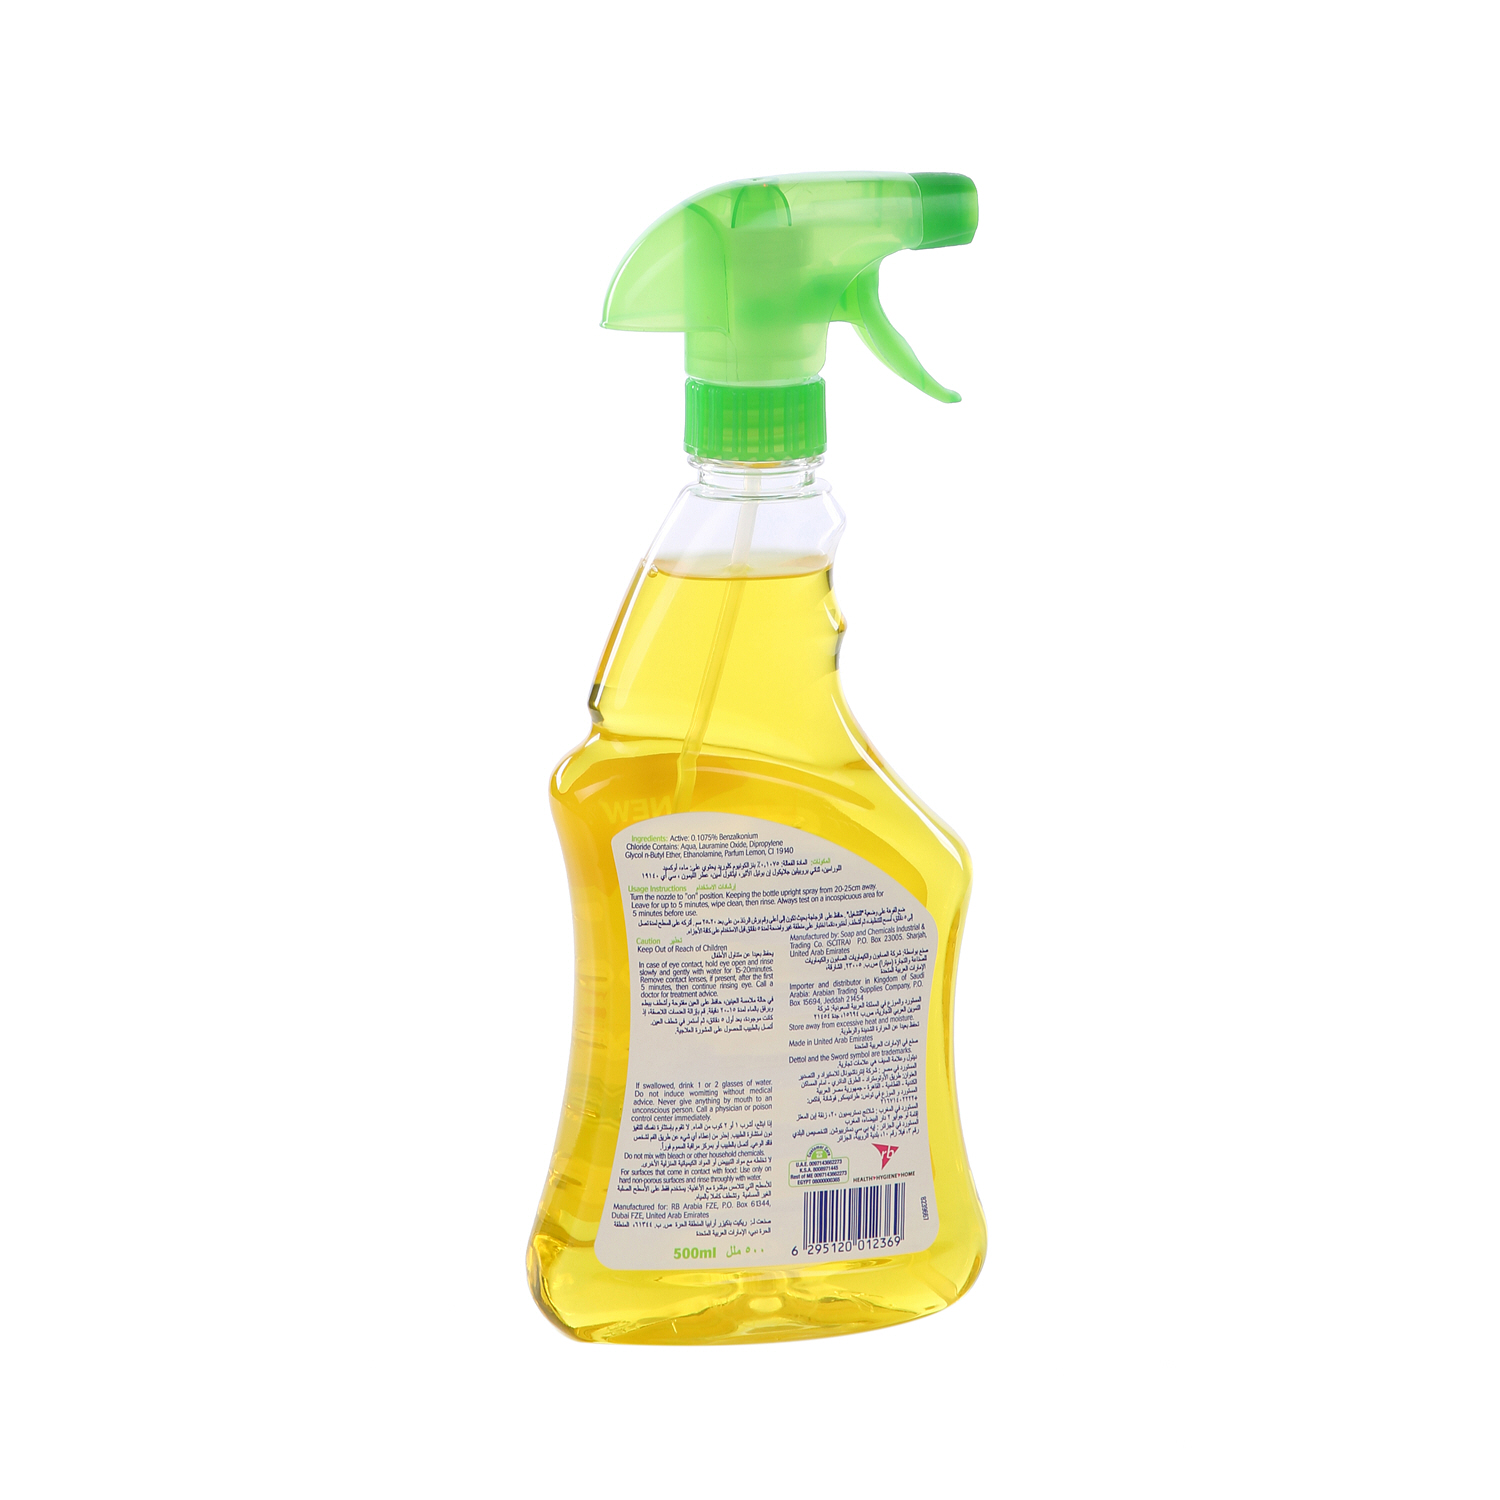 Dettol Healthy Home All Purpose Cleaner Lemon 500 ml